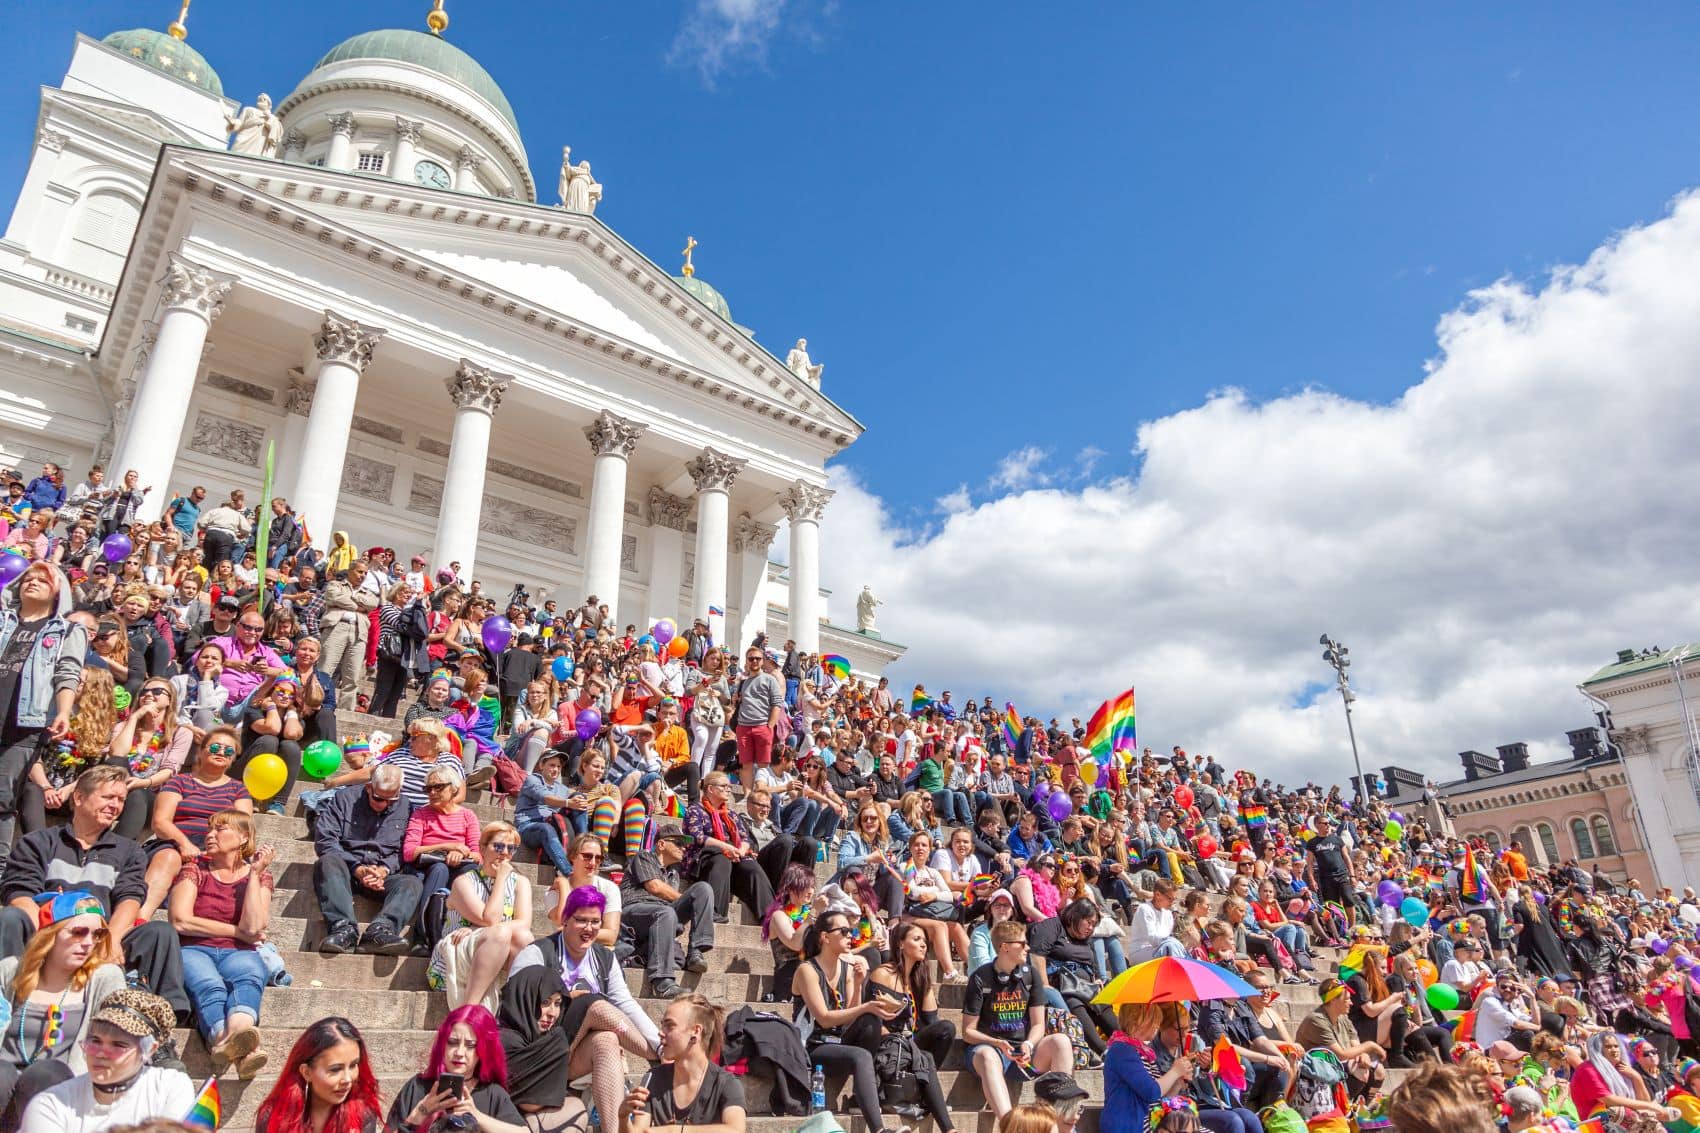 Teilnehmer des Helsinki Pride Festivals auf Treppen vor dem Dom